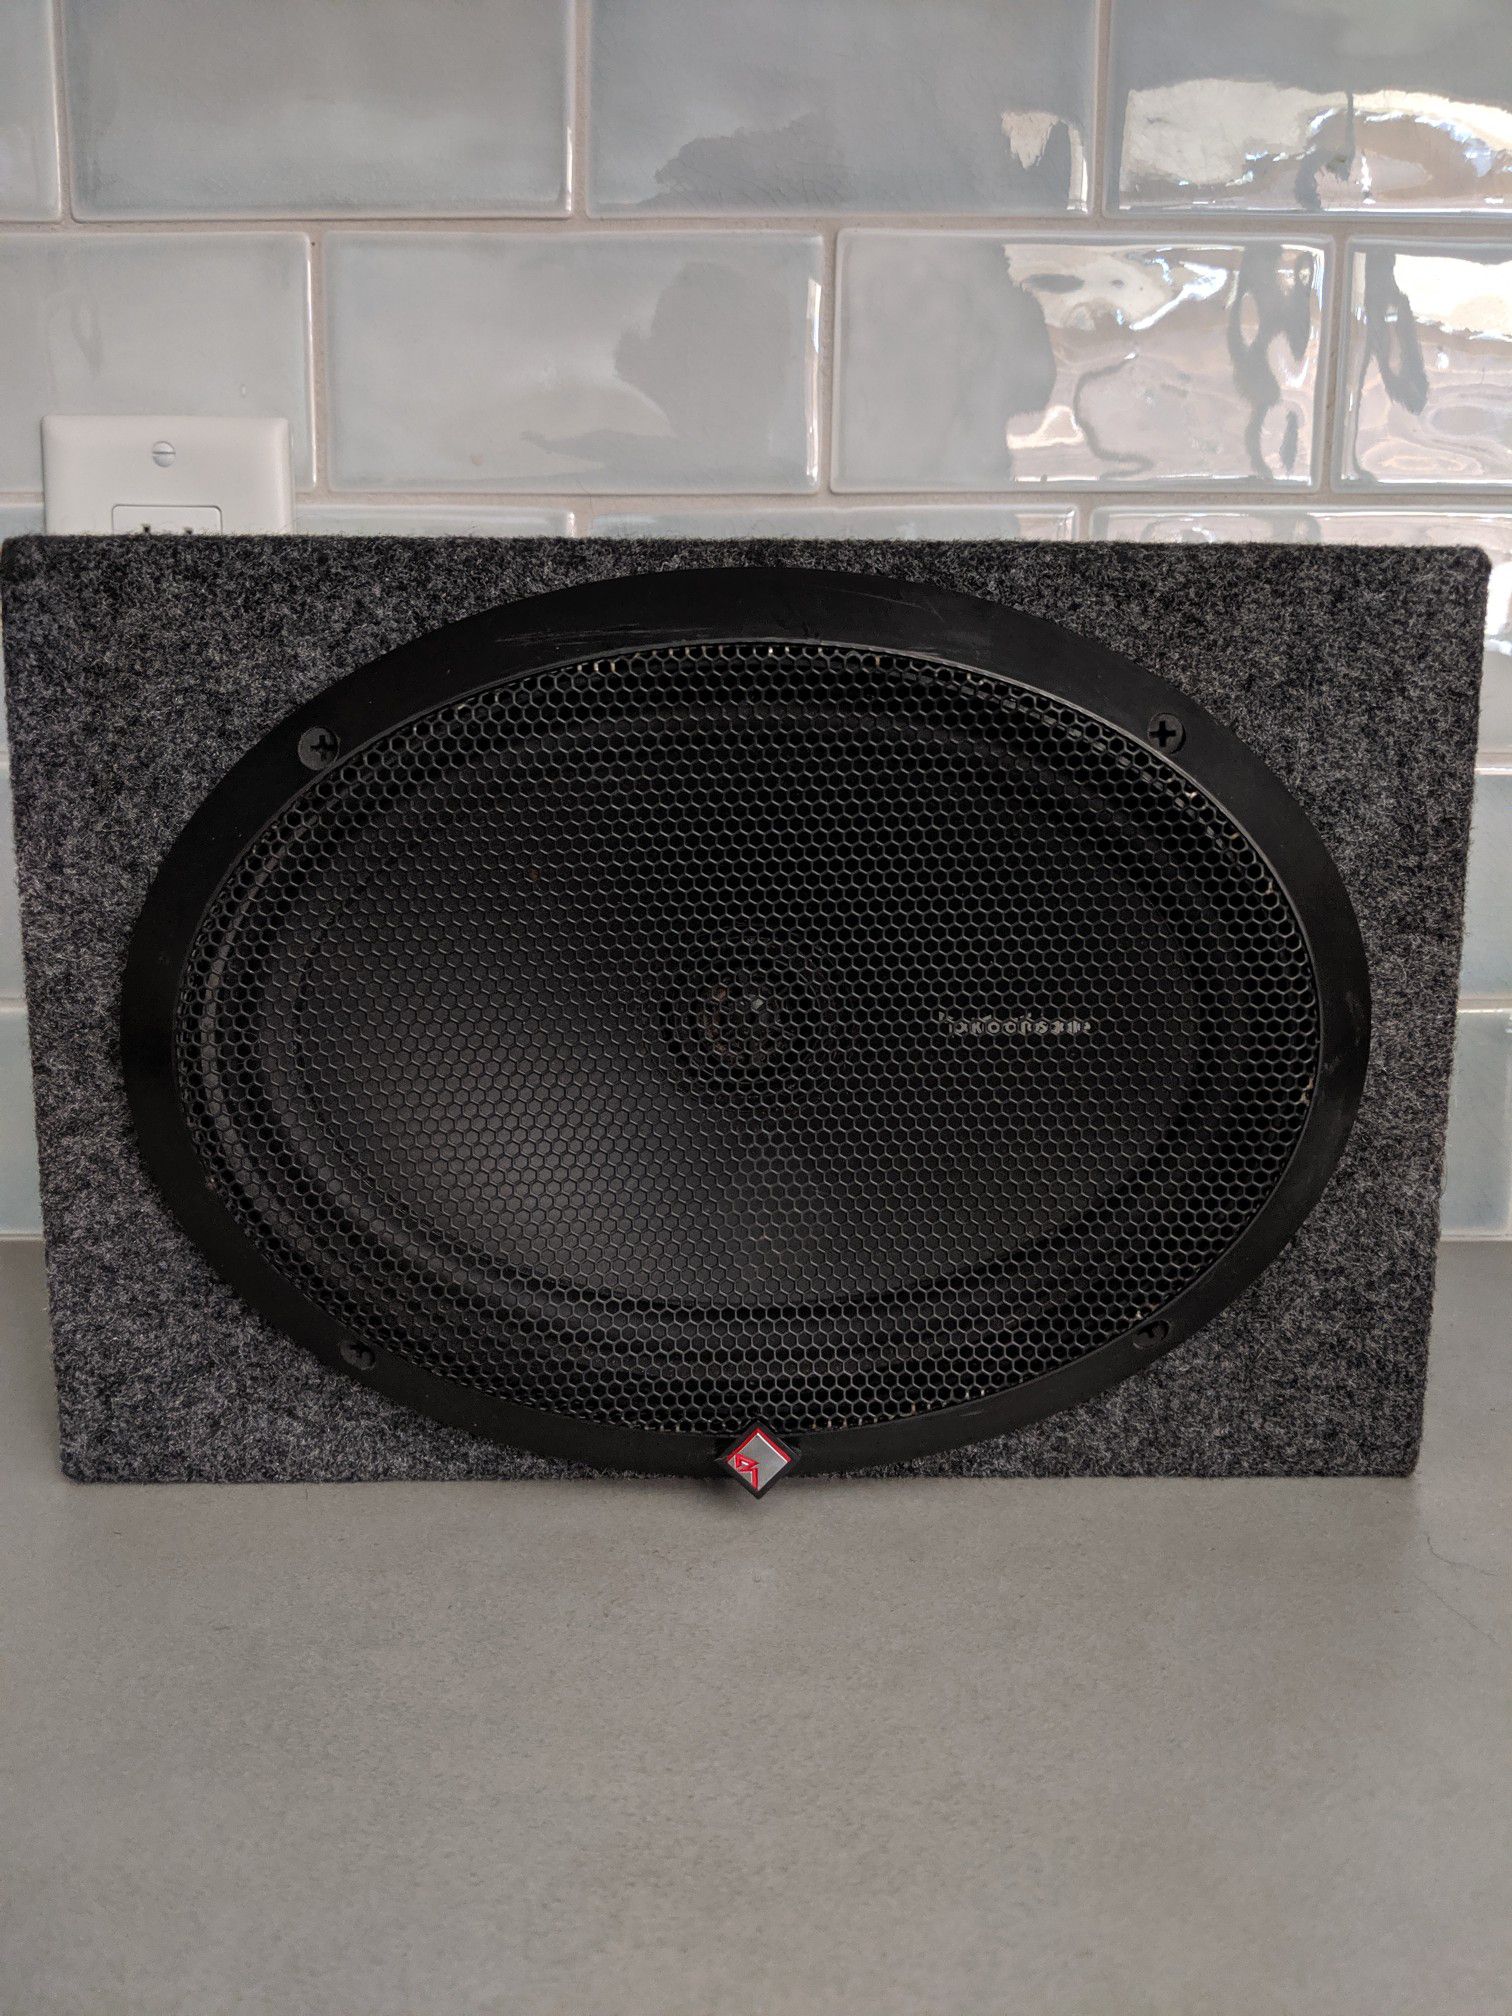 Rockford Fosgate Car Speakers 6"x9" w Speaker Box